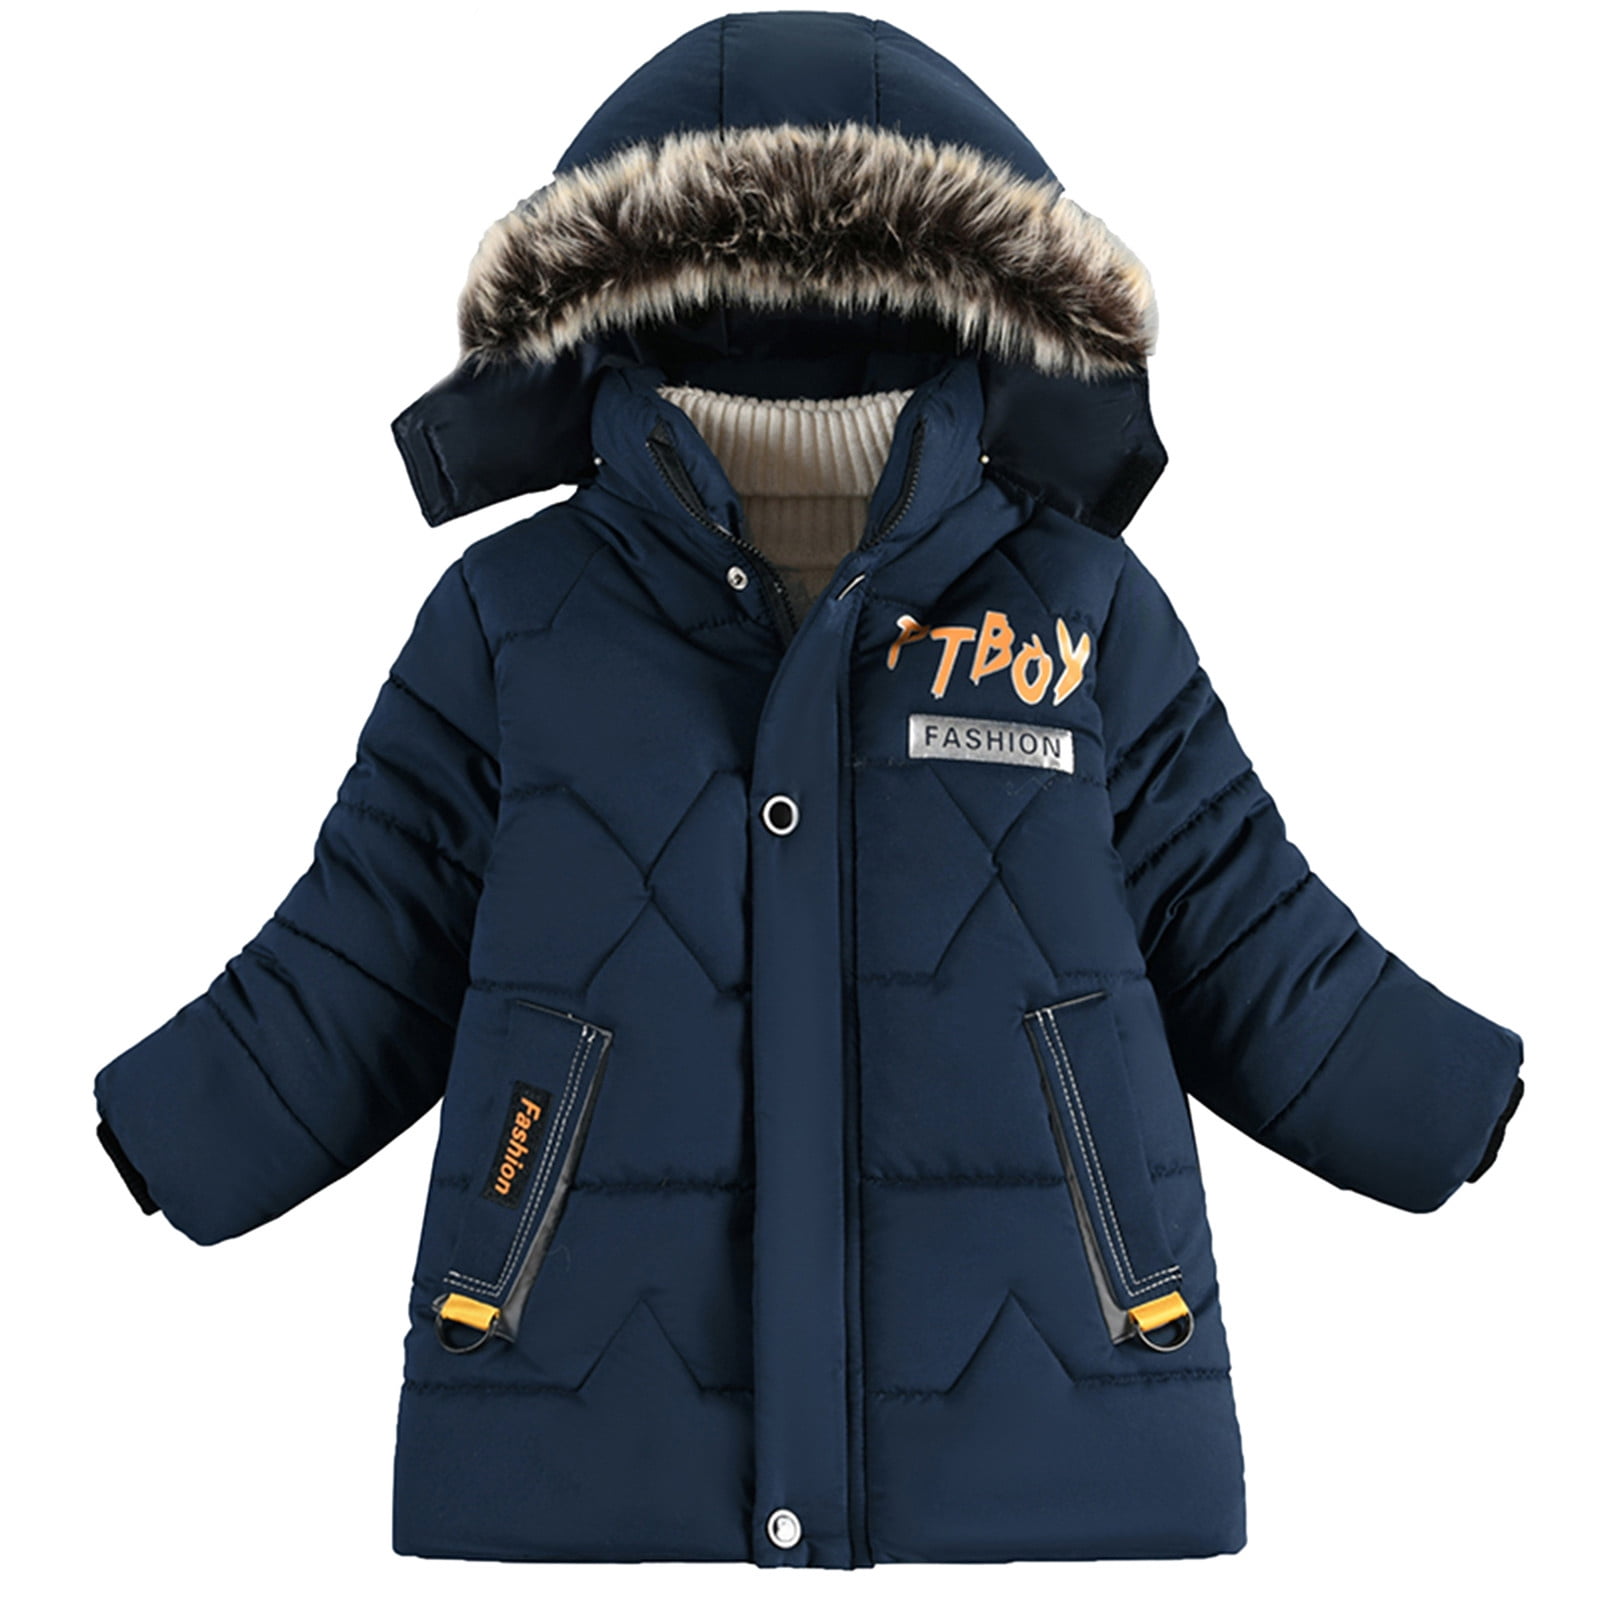 mveomtd Children Winter Boy Jacket Coat Hooded Coat Fashion Kids Warm ...